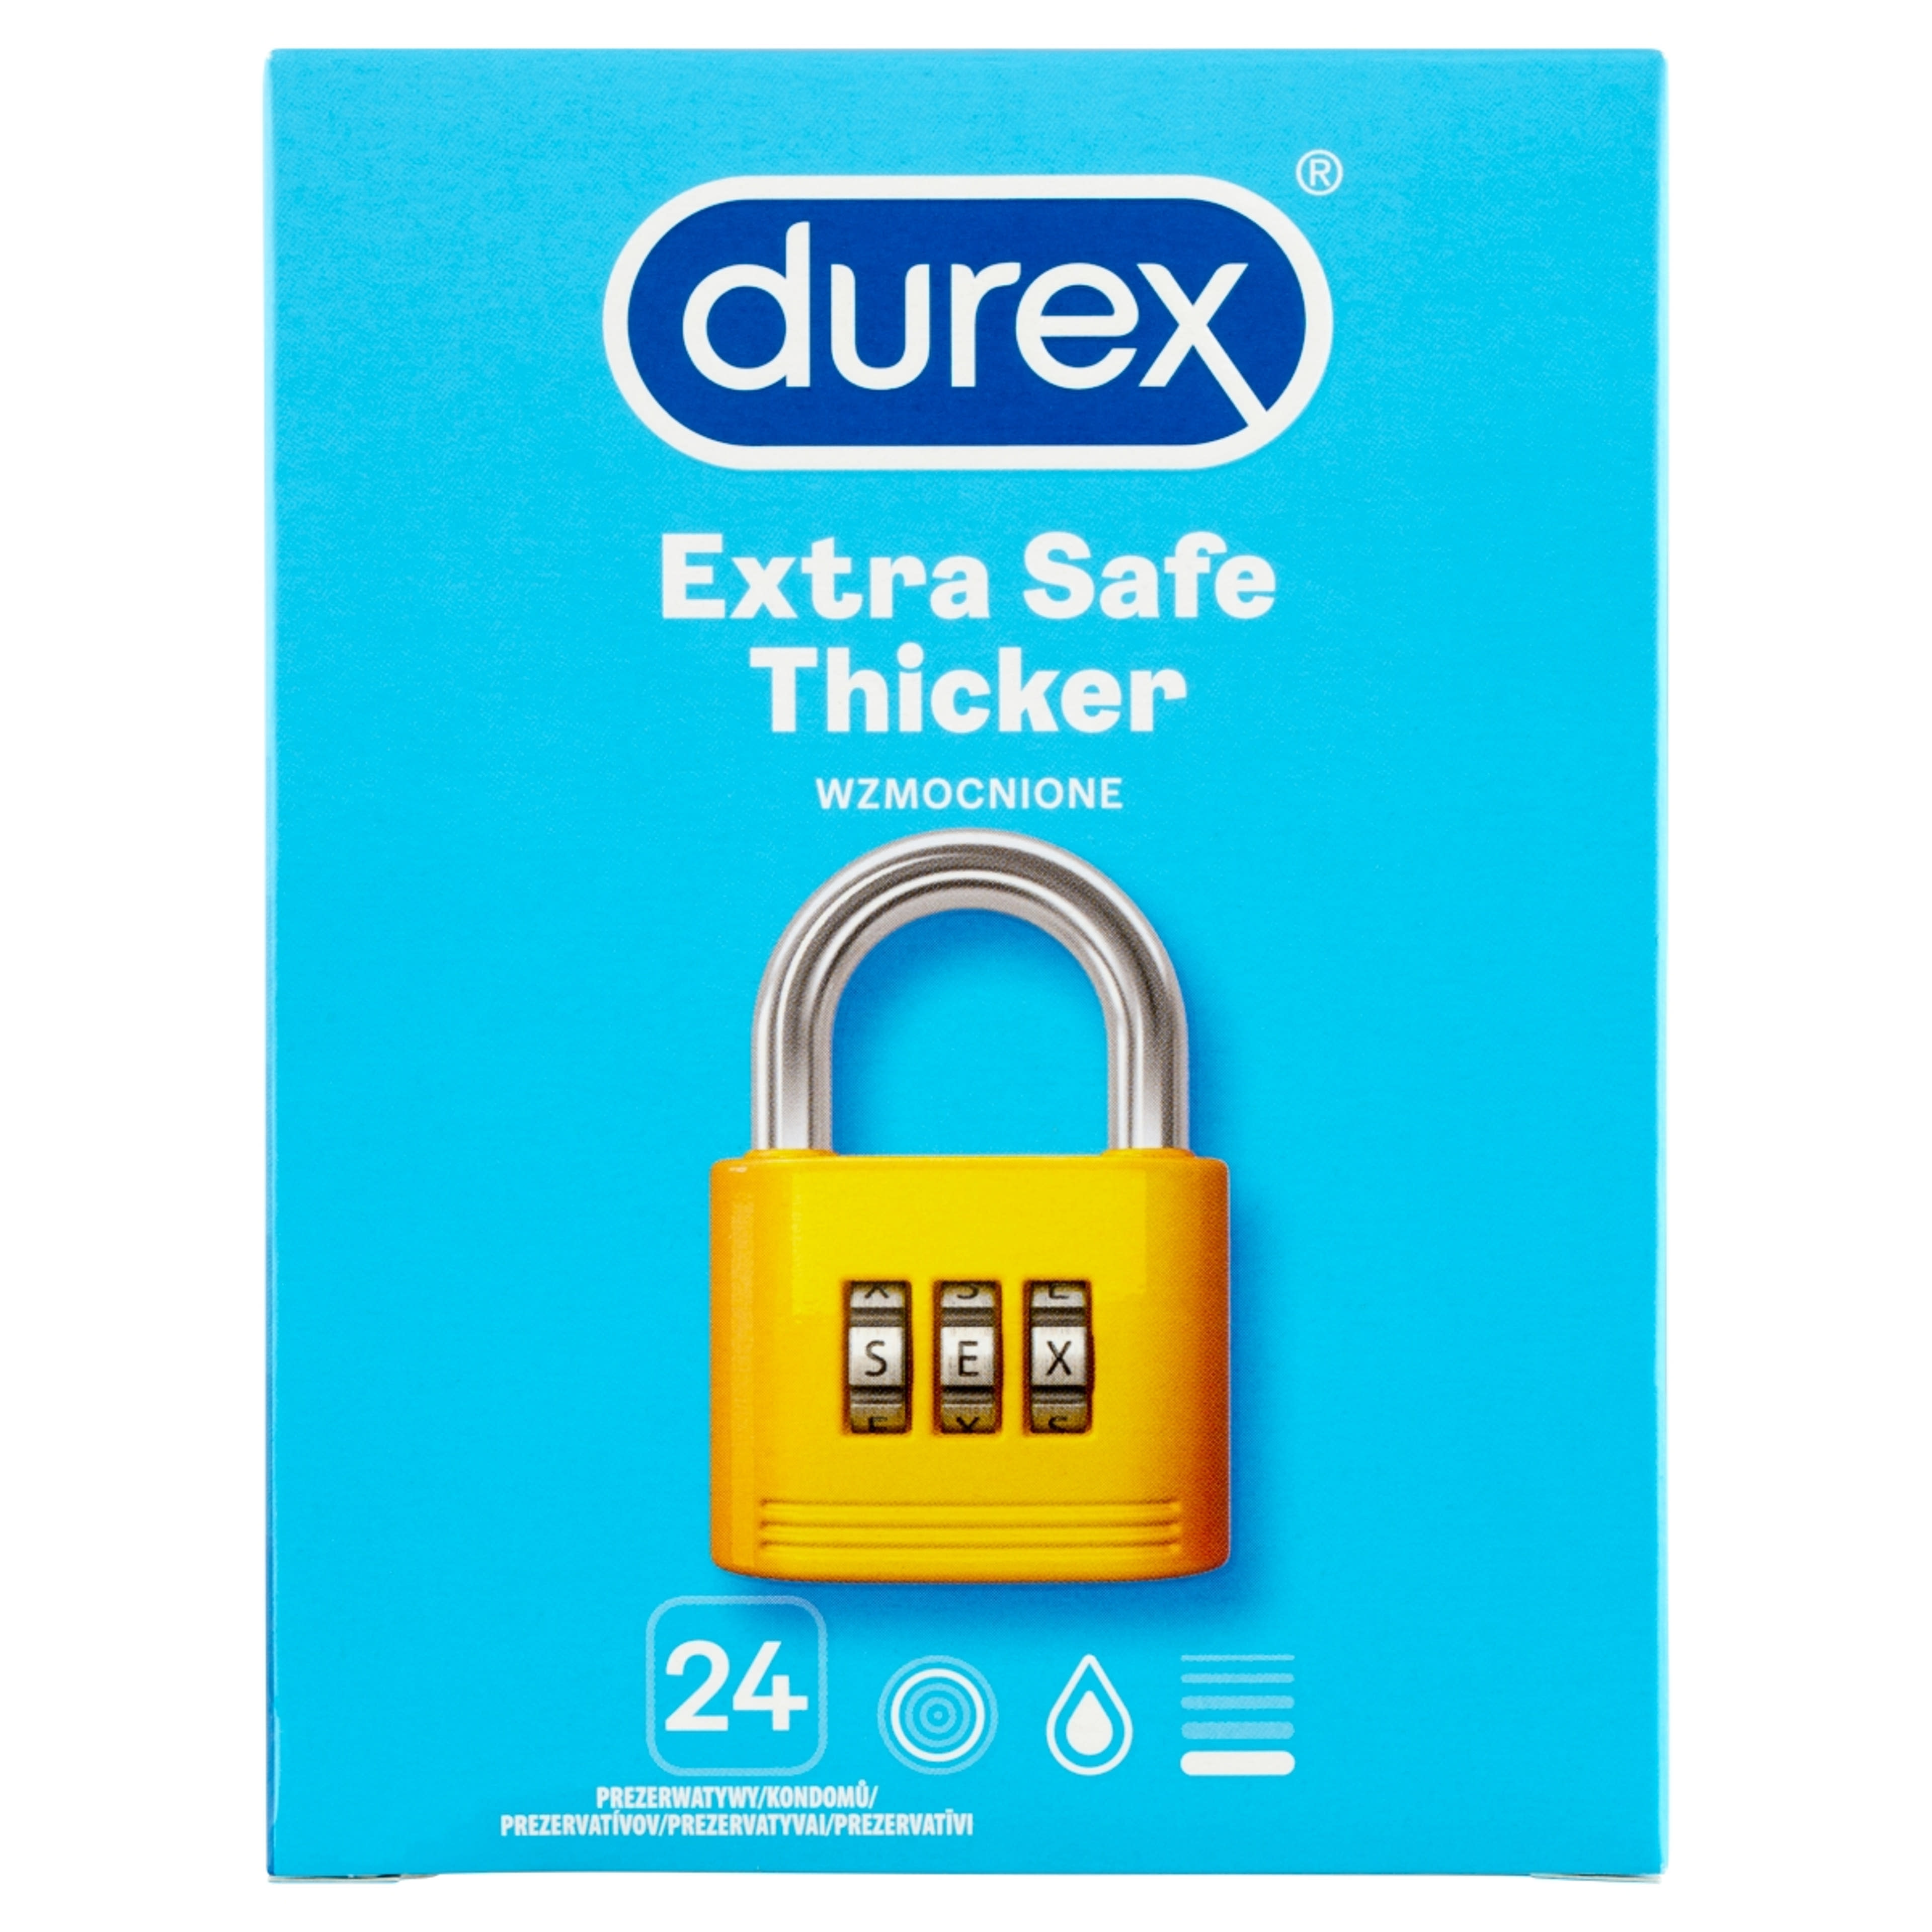 Durex óvszer extra safe - 24 db